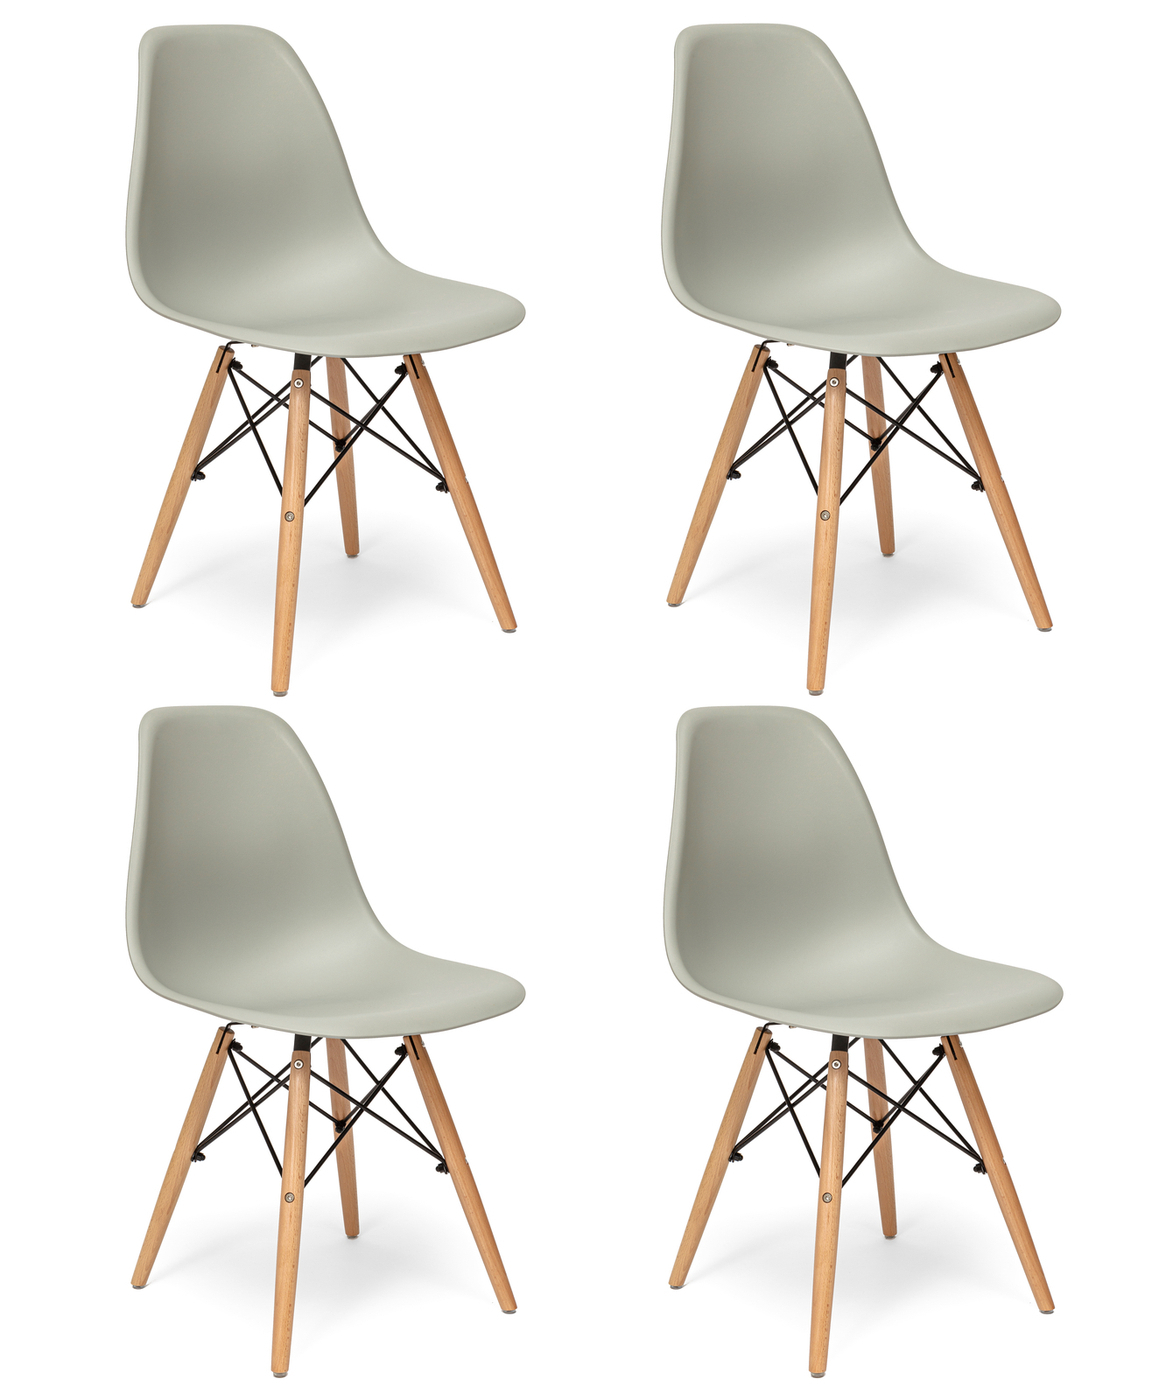 Комплект стульев 4 шт для кухни. Комплект стульев для кухни DSW Style, 4 шт.. FN.22.2, 1 шт. Комплект стульев Eames DSW Premium. Стул Eames Style. Стул Stool Group Tulip белый.